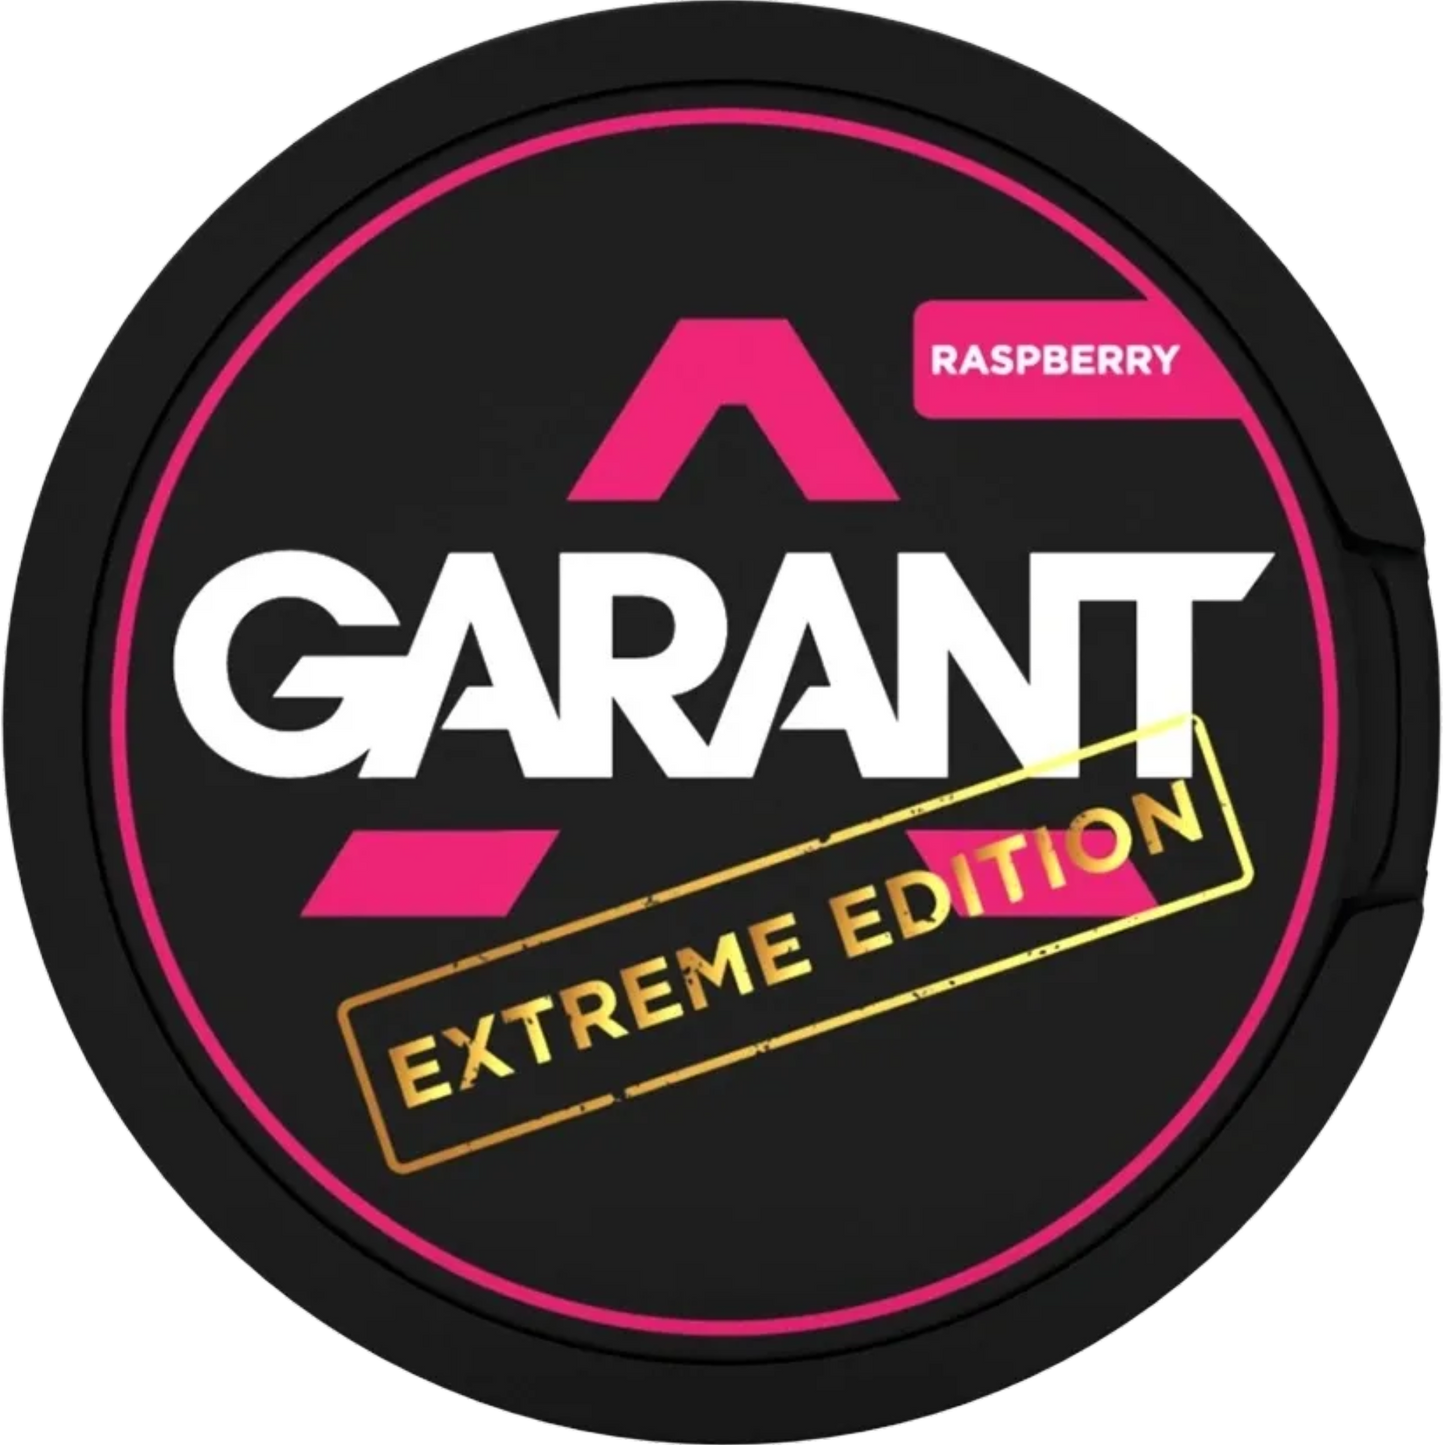 Garant Extreme Raspberry - 50mg